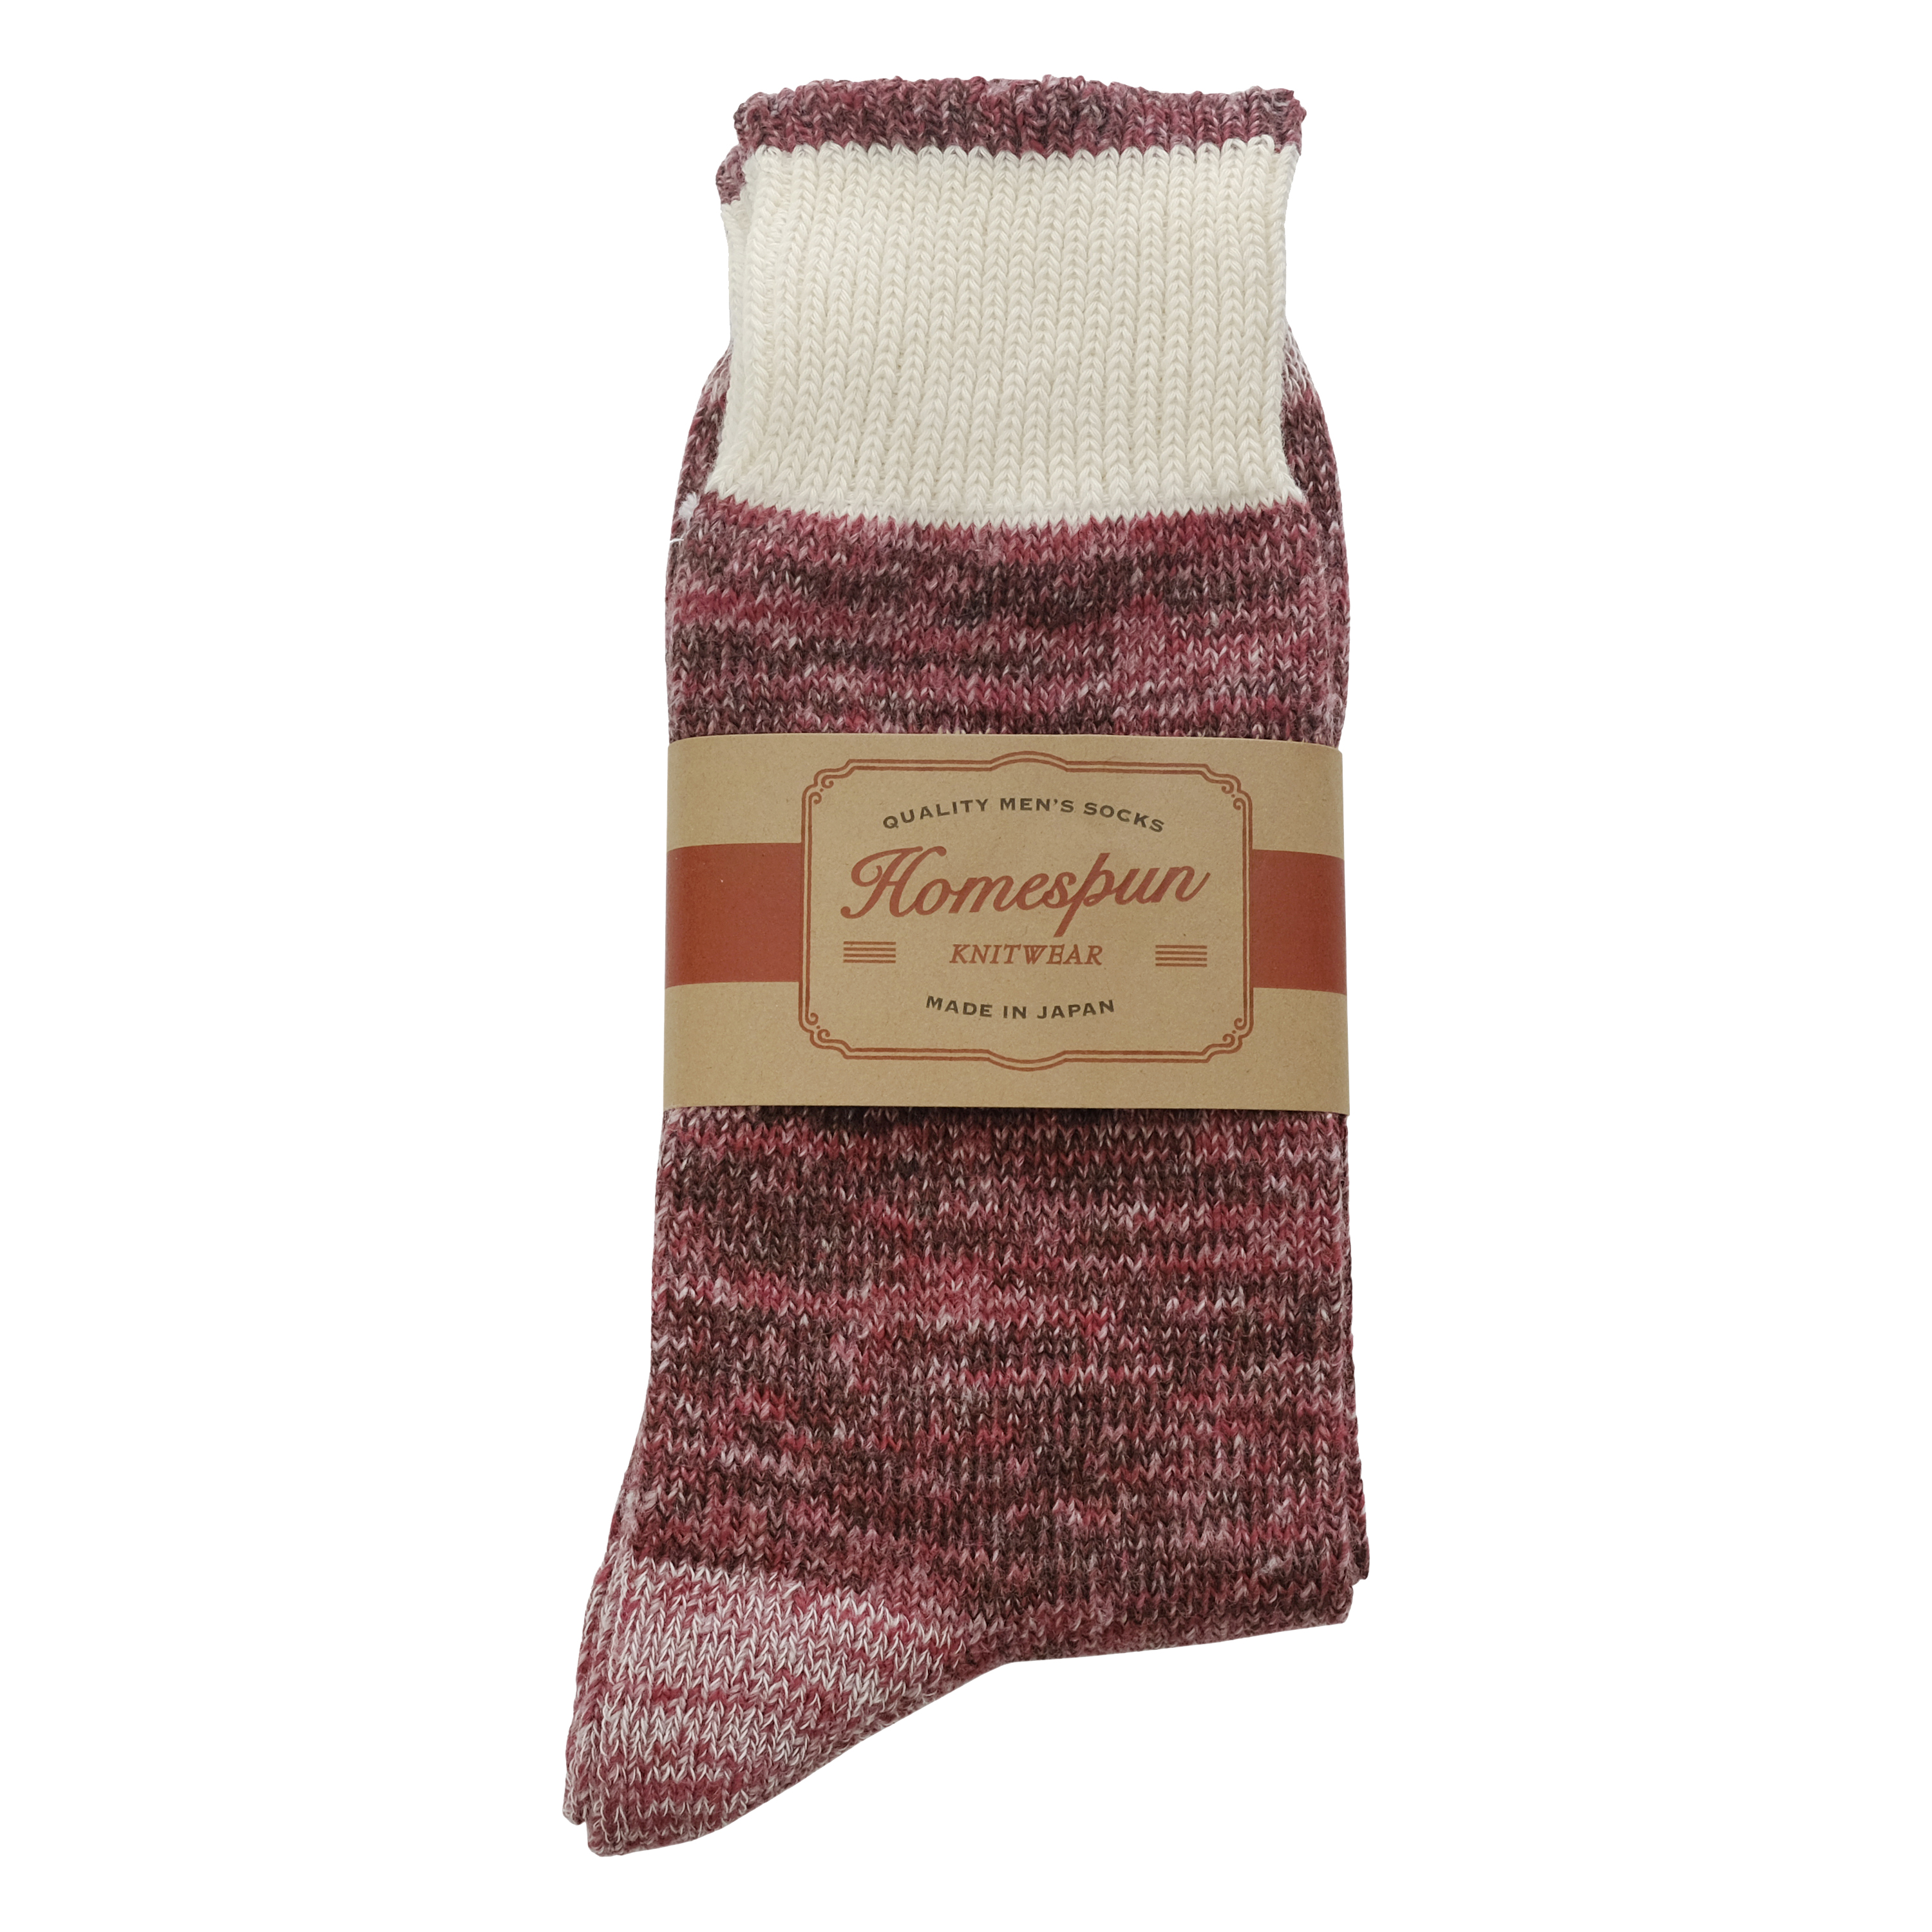 Homespun Knitwear - Lot 011 Dustbowl Work Socks - Burgundy